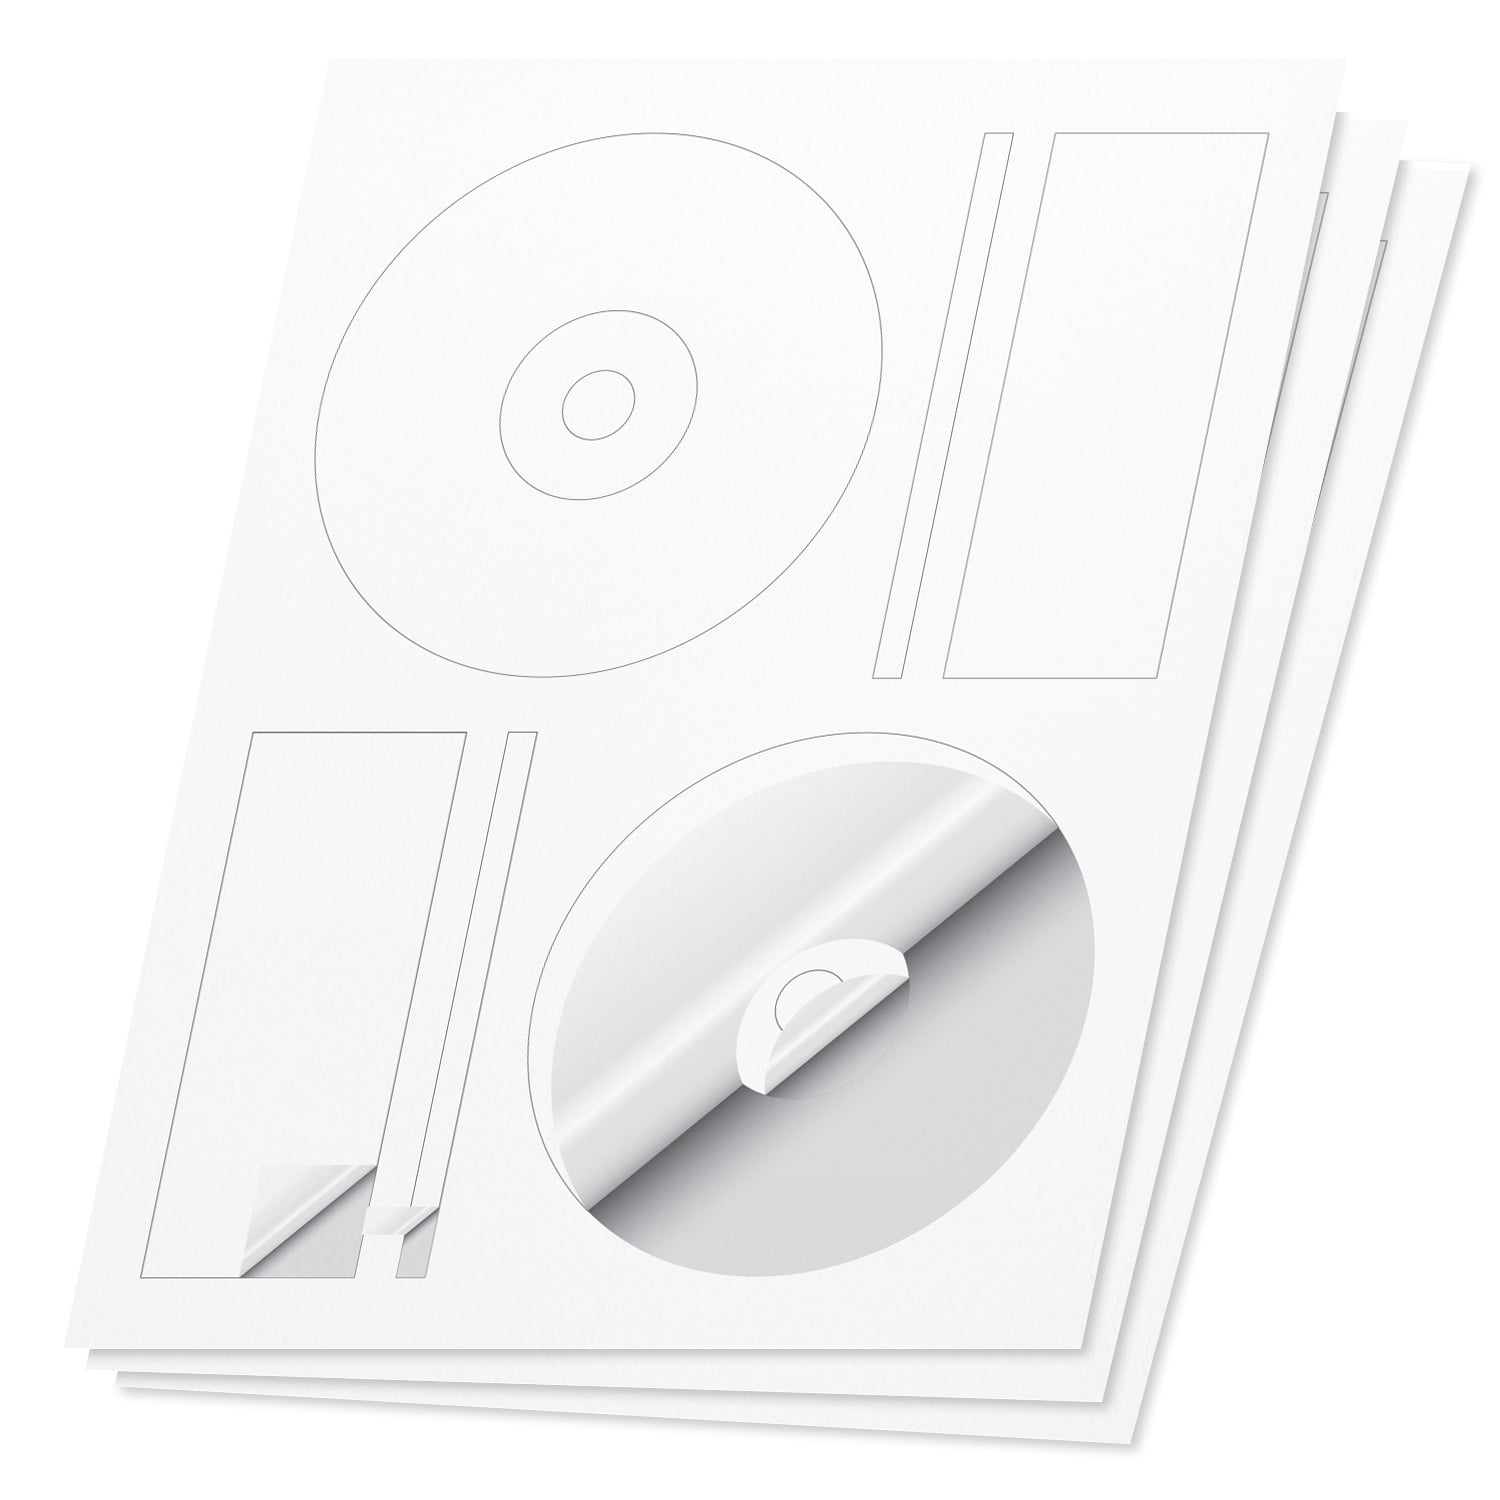 32020412 mem-32020412 Memorex 3202-0412 White Matte Cd/dvd Label Refills for sale online 